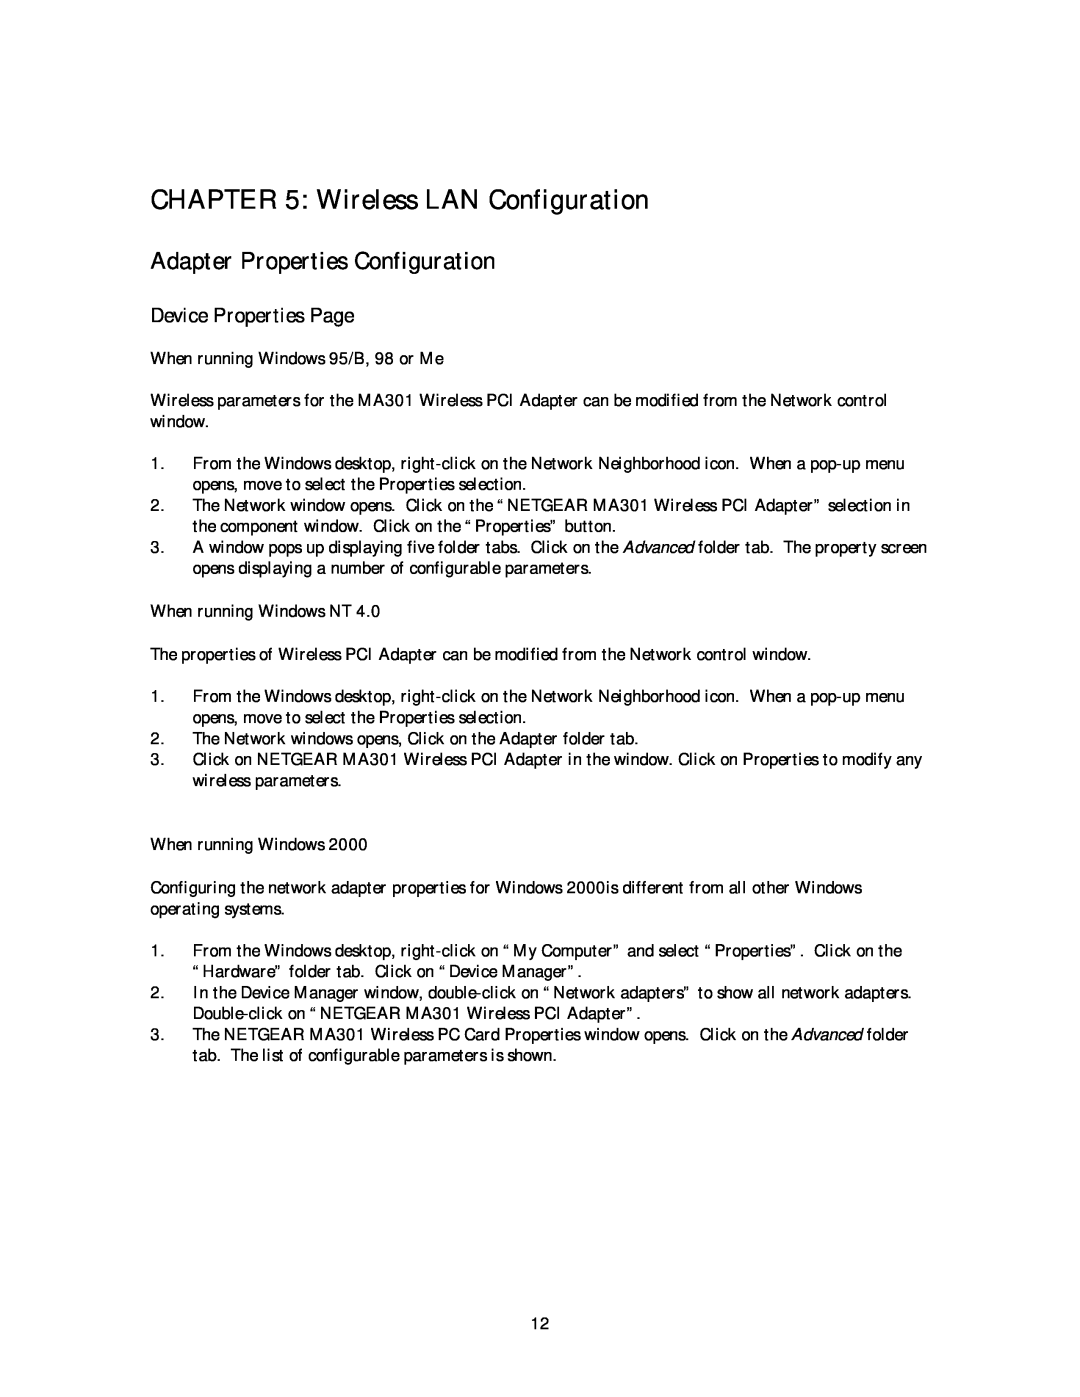 NETGEAR MA 301 Wireless LAN Configuration, Adapter Properties Configuration, Device Properties Page, When running Windows 